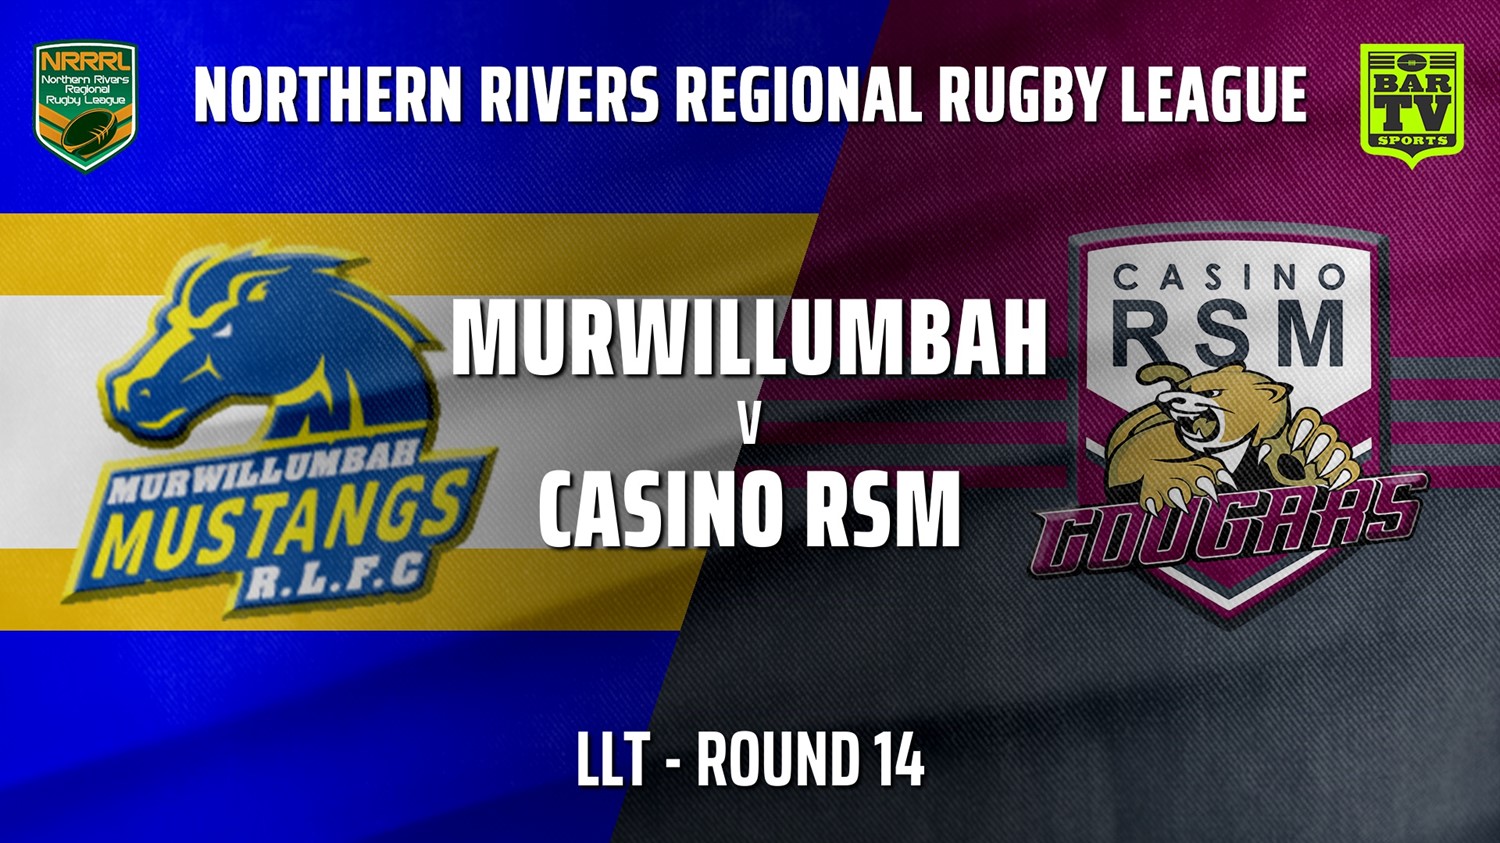 210808-Northern Rivers Round 14 - LLT - Murwillumbah Mustangs v Casino RSM Cougars Slate Image